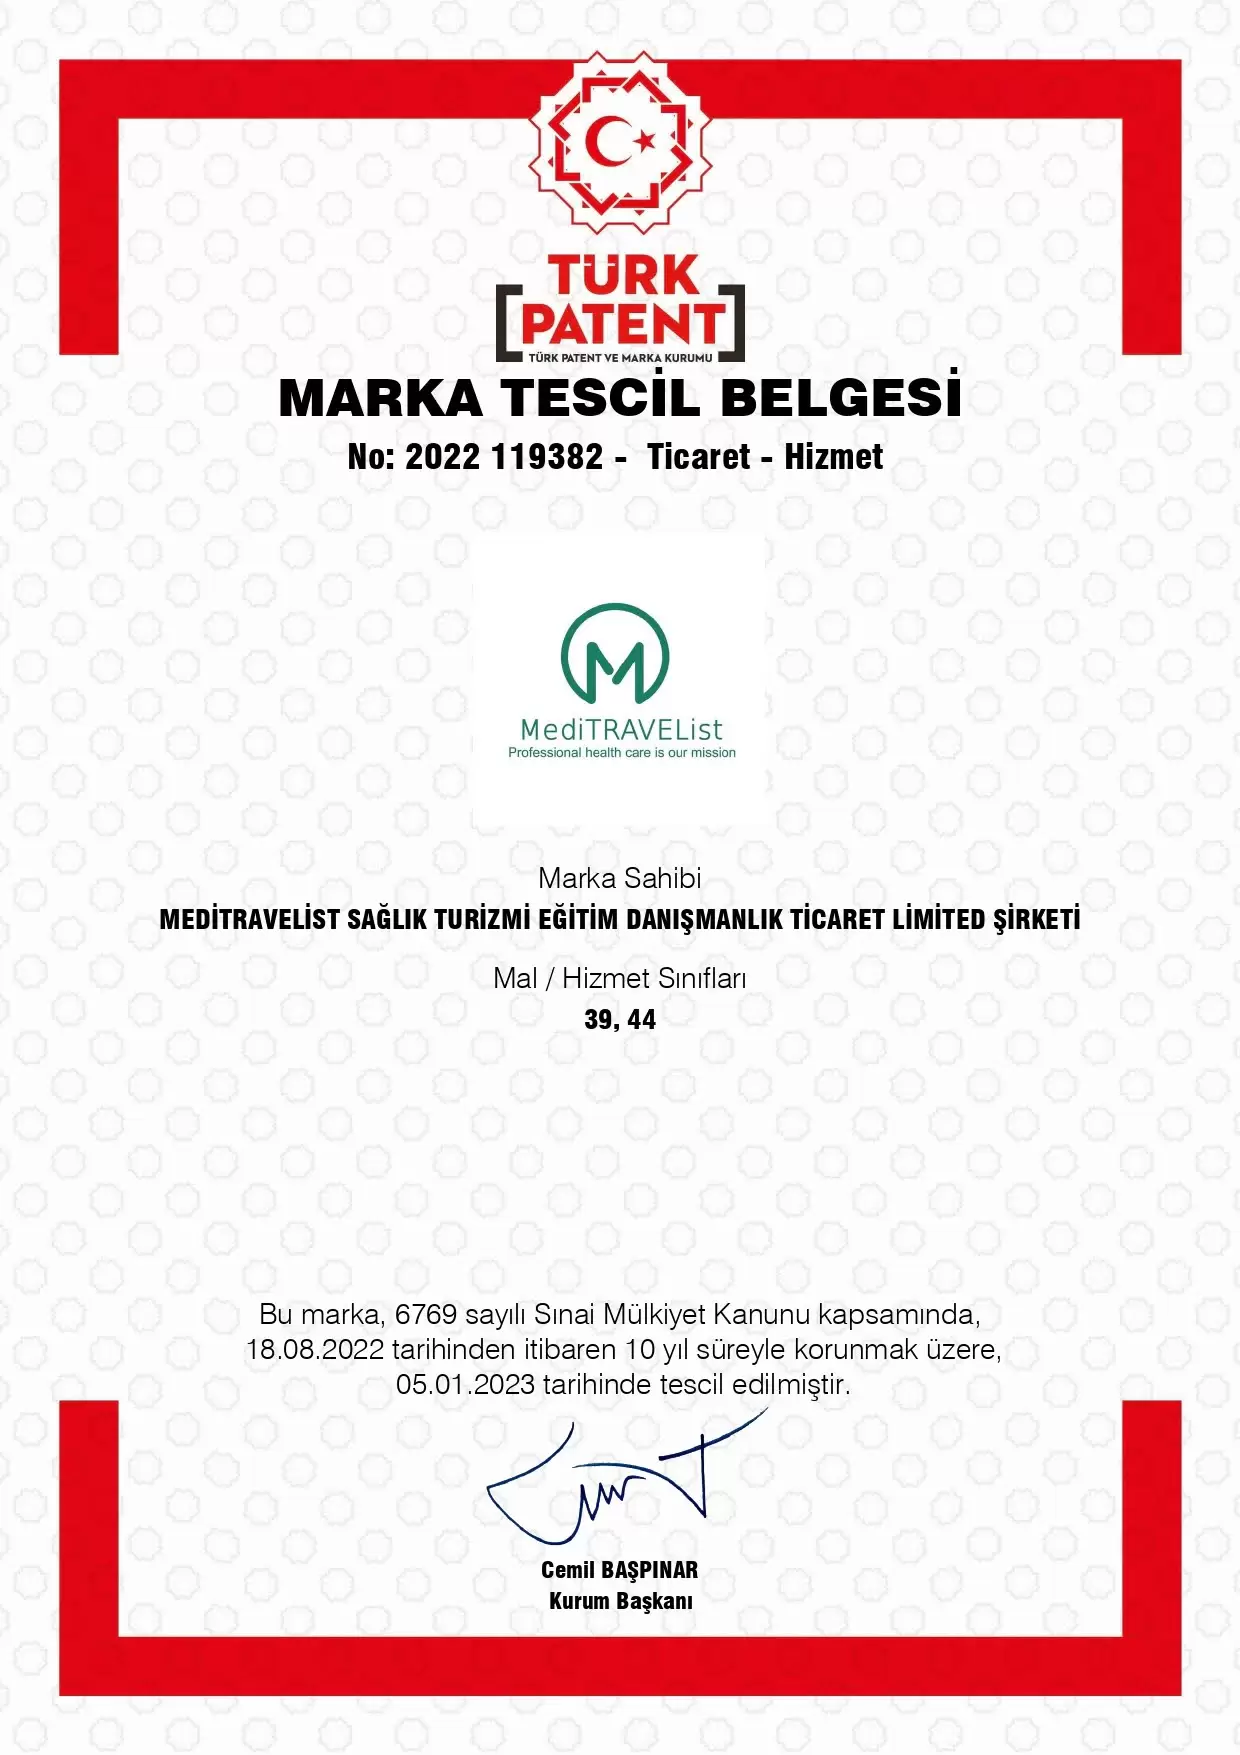 Meditravelist-Trademark Registration Certificate authorized by Turkish Patent Institute